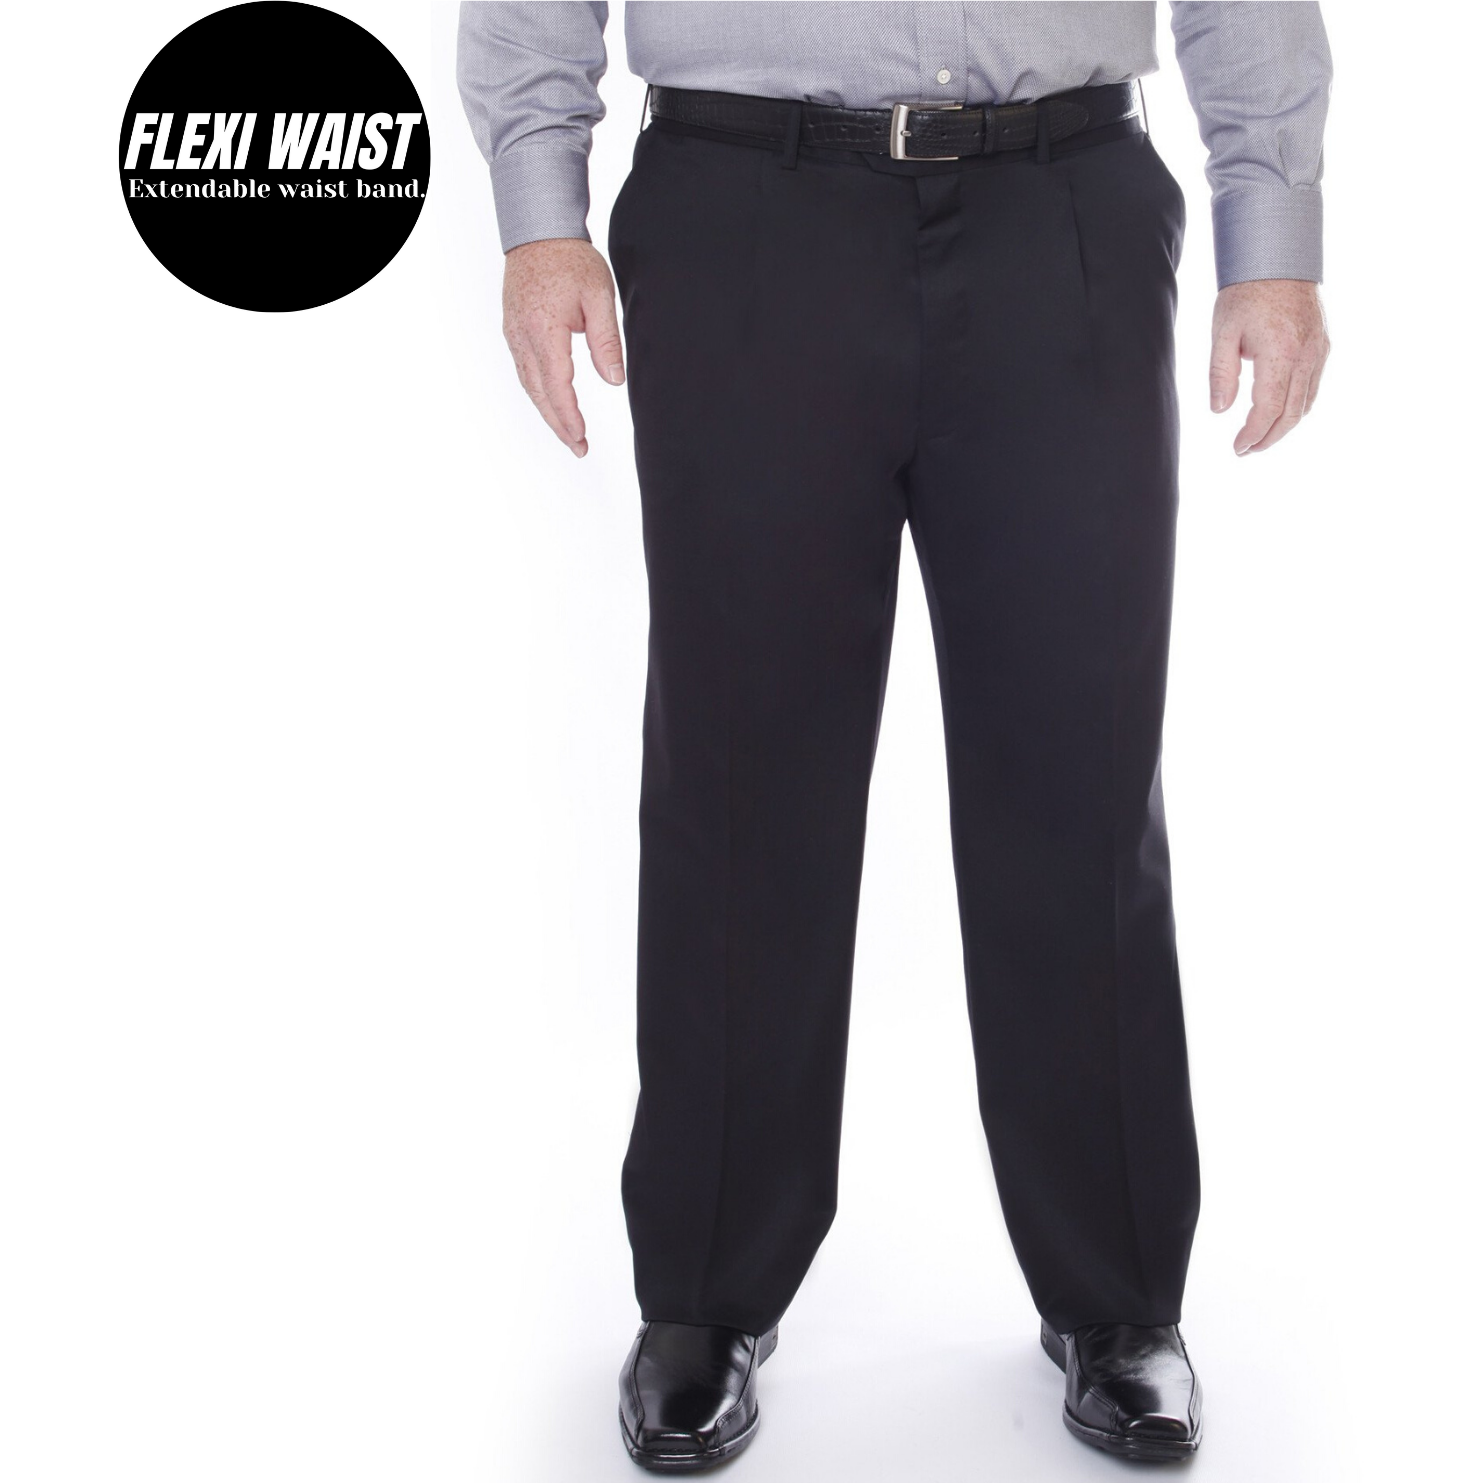 Mens Formal Casual Work Black Trousers size 30-50 Waist 27 29 31  inside Leg